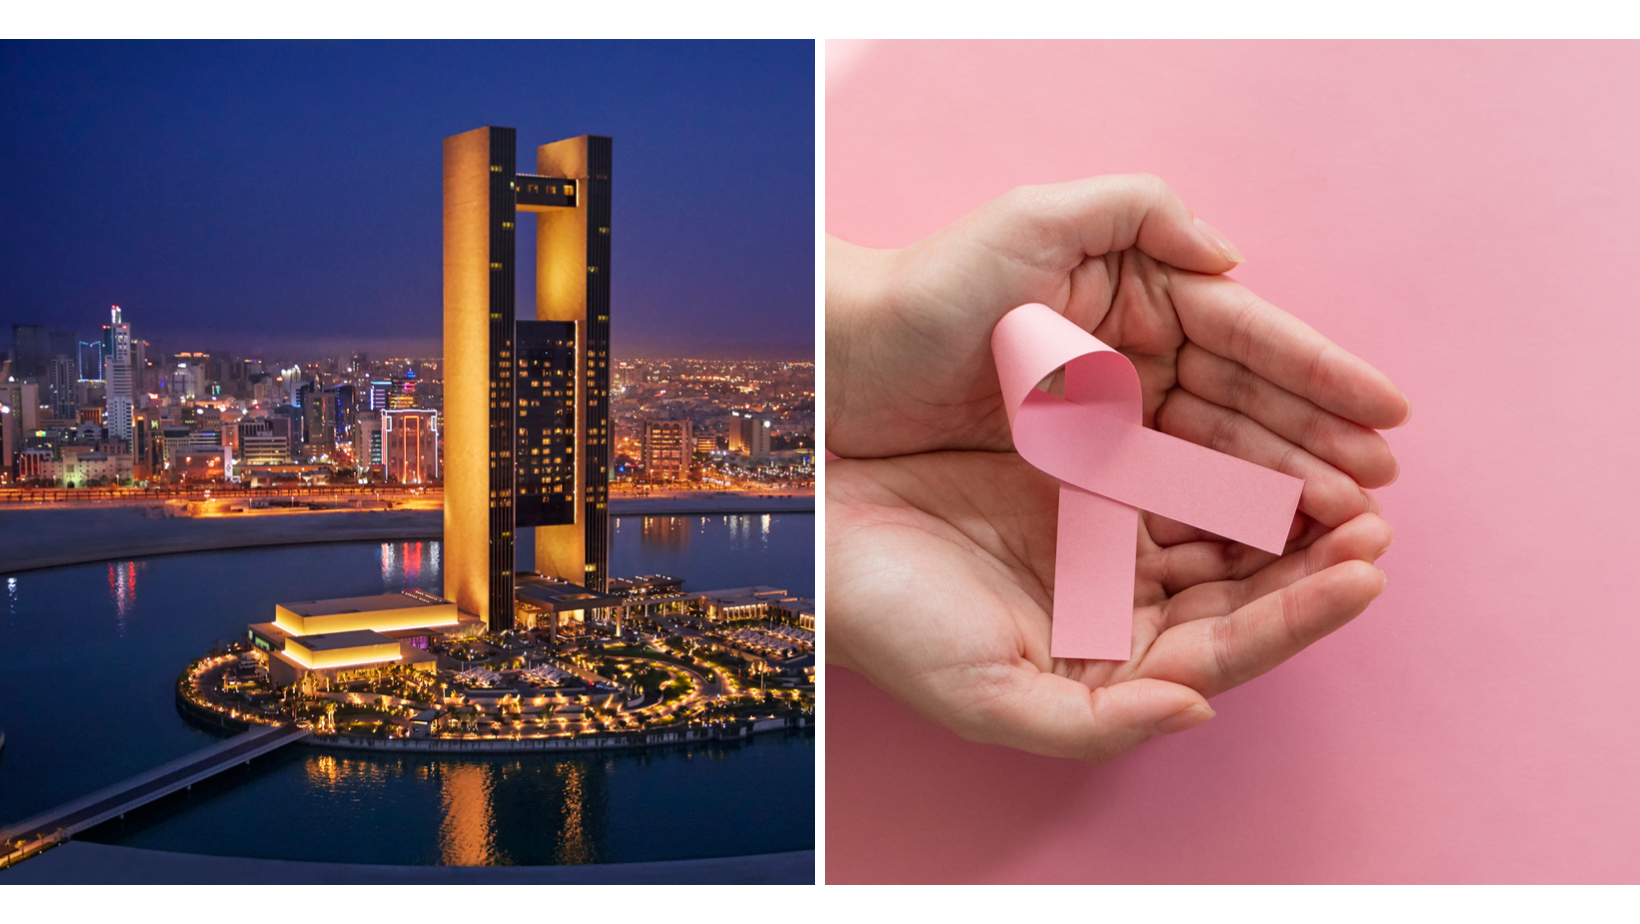 four seasons bahrain pink october pinktober breast cancer awareness bahrain cancer society